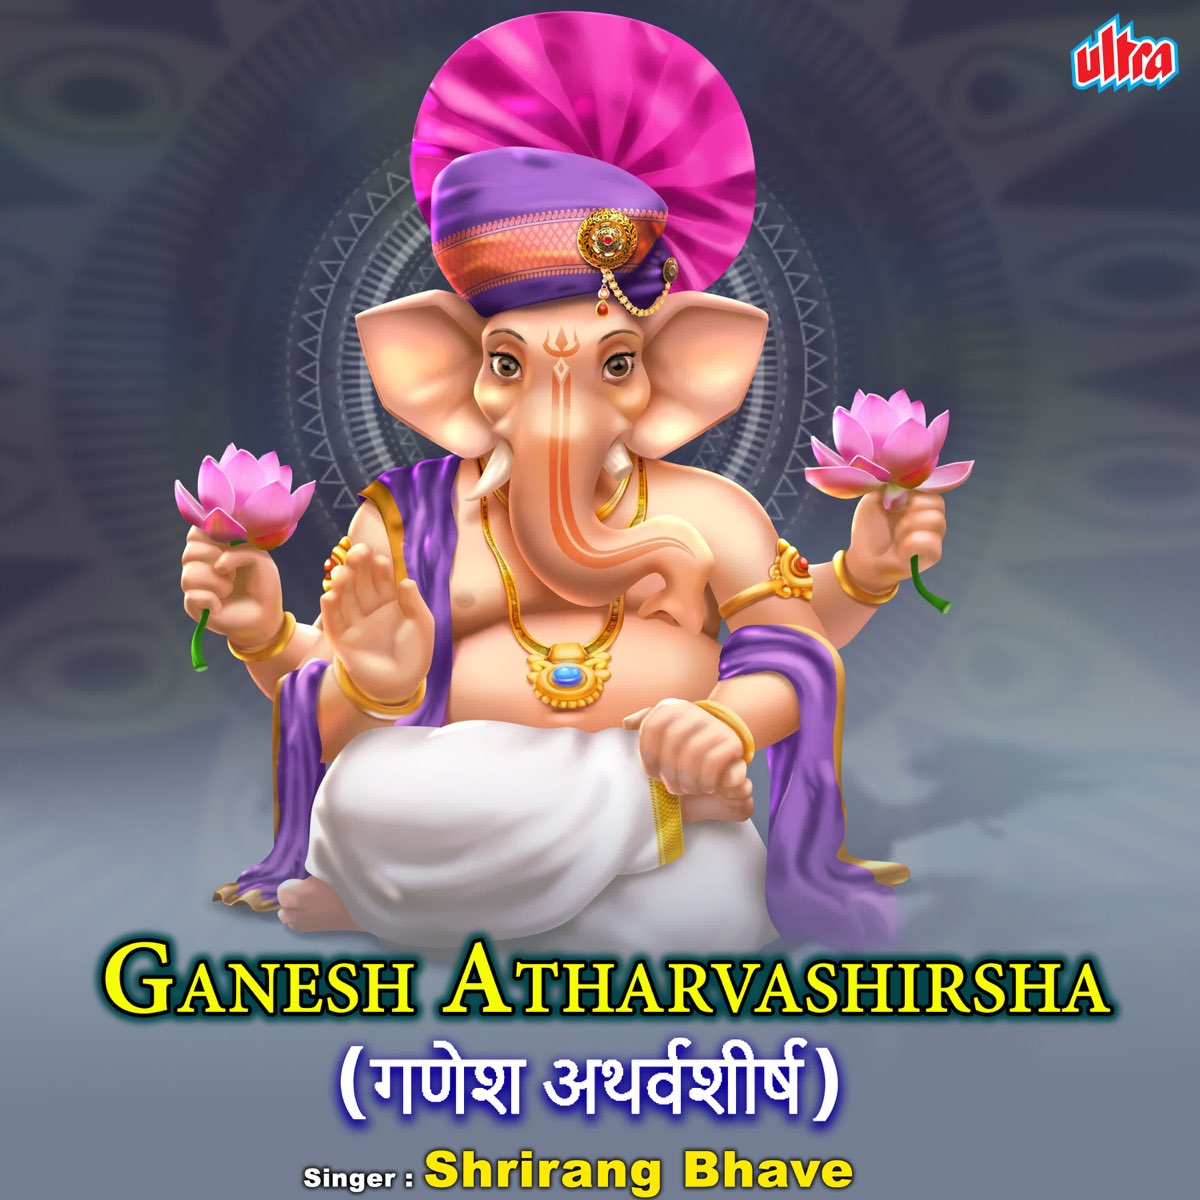 Ganesh Atharvashirsha by Shrirang Bhave on Apple Music